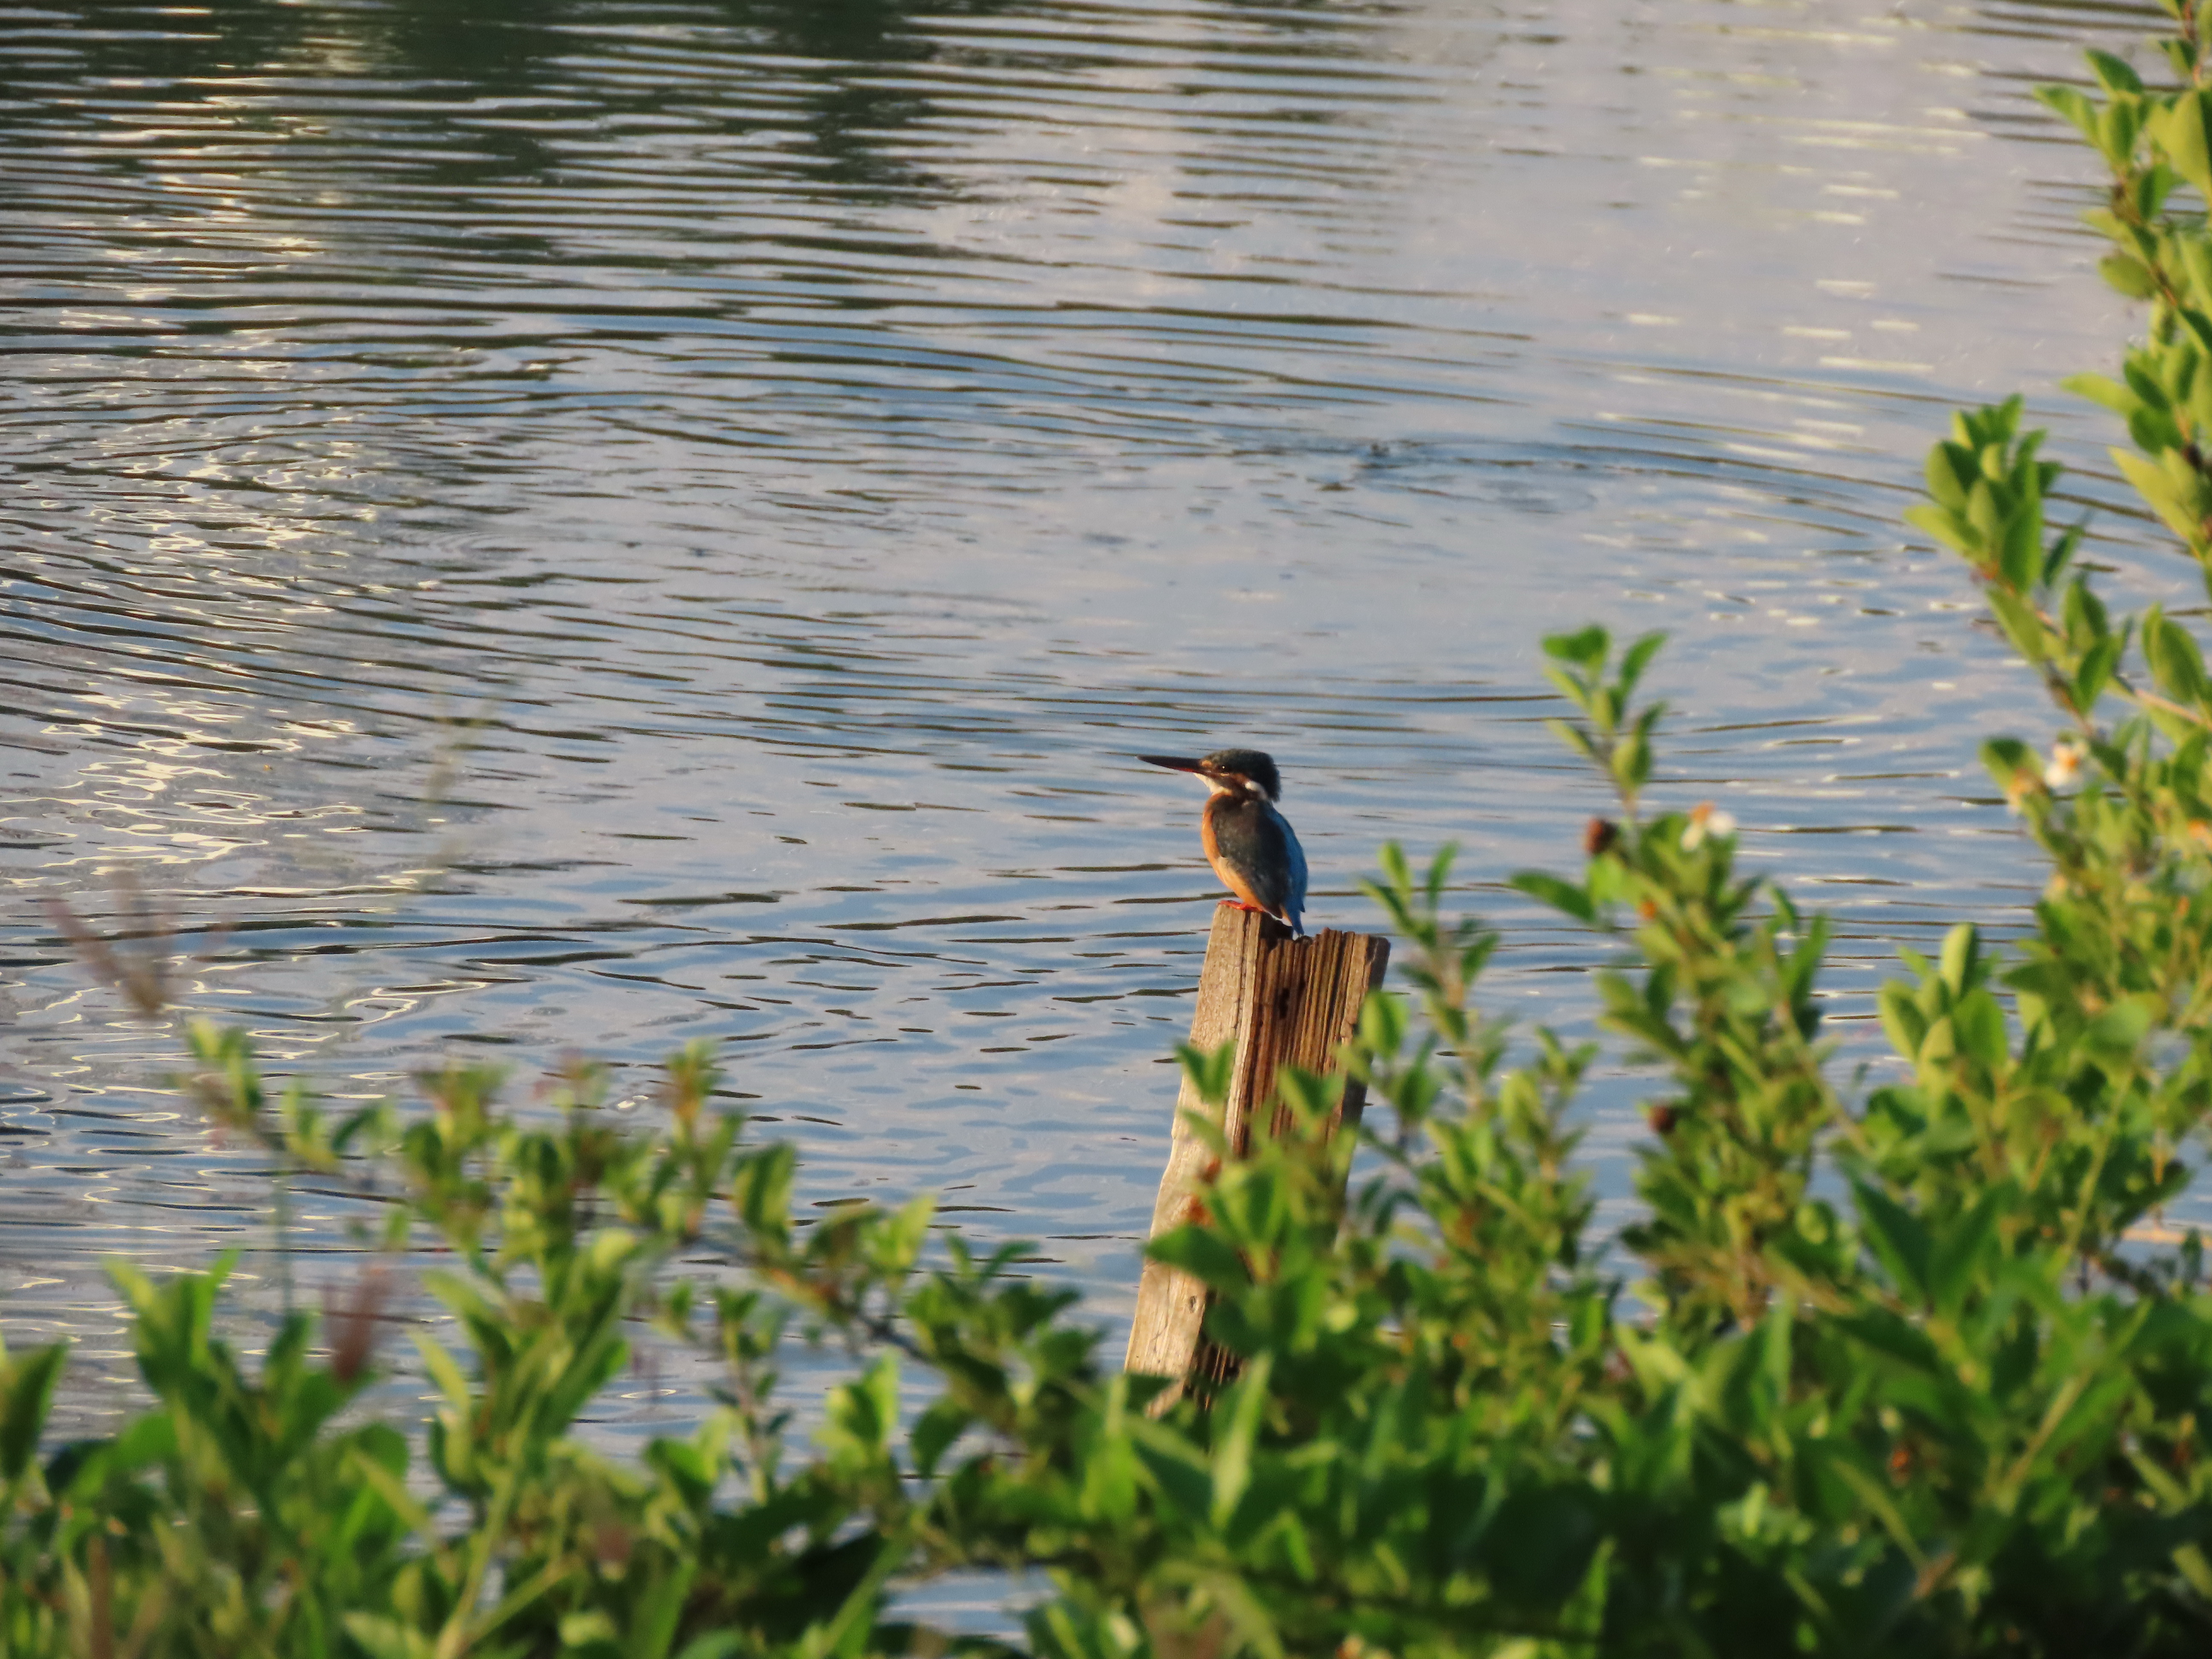 A kingfisher's fruitful day